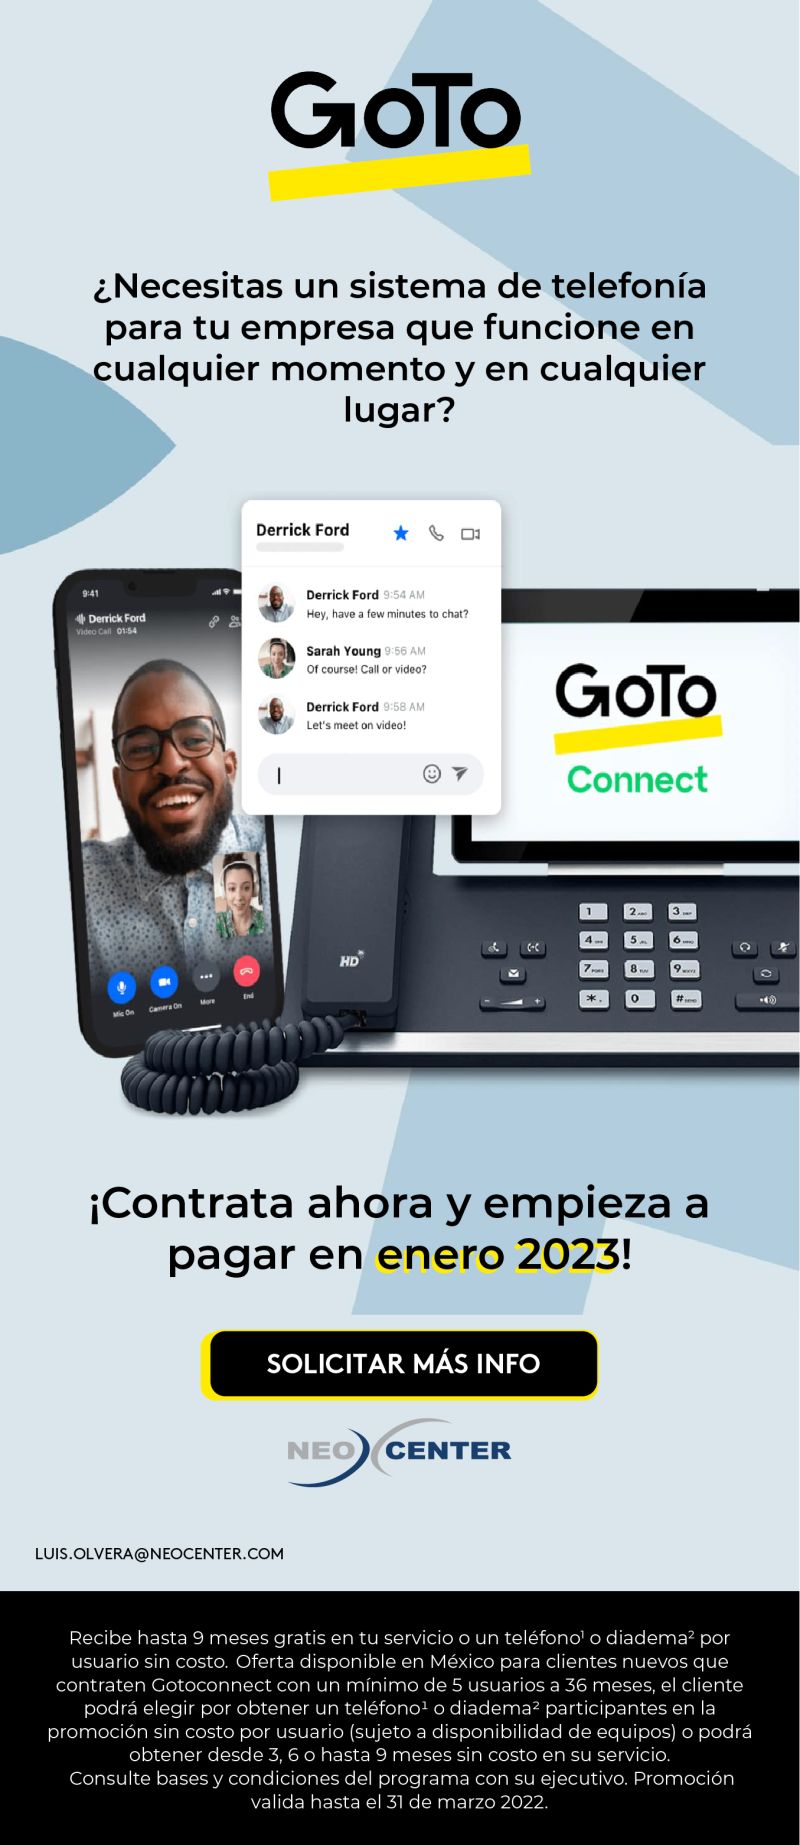 Let video chat in Belo Horizonte